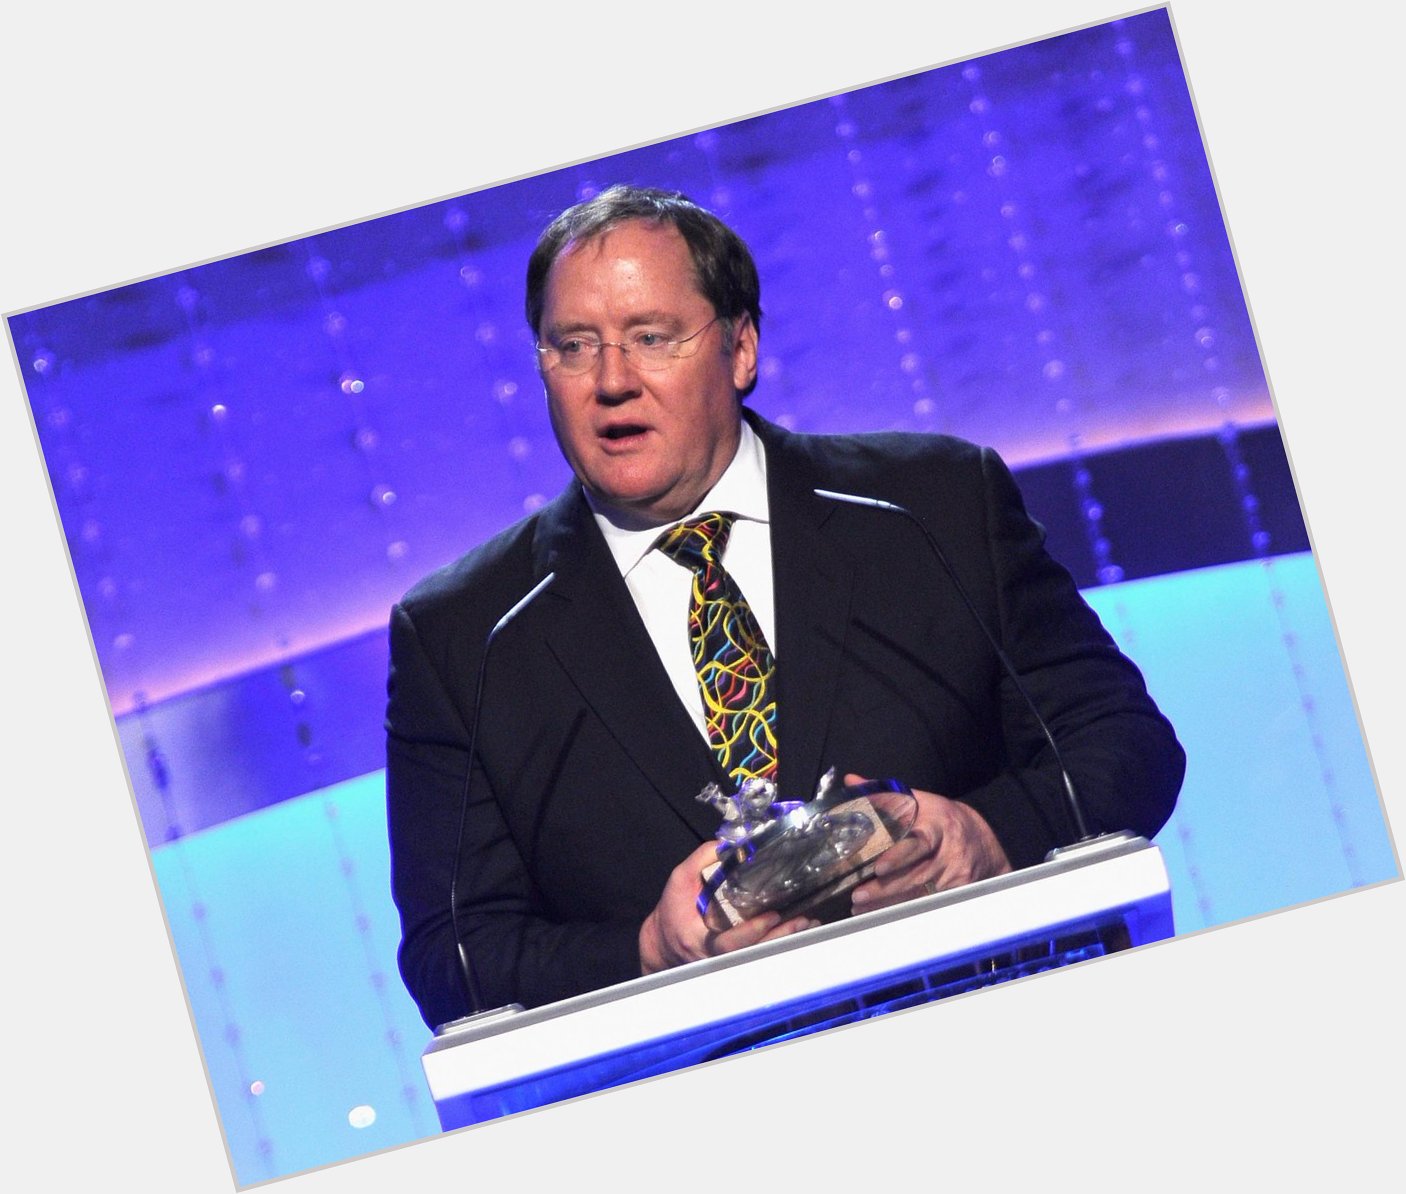 Happy Birthday to our 2011 honoree, John Lasseter! 